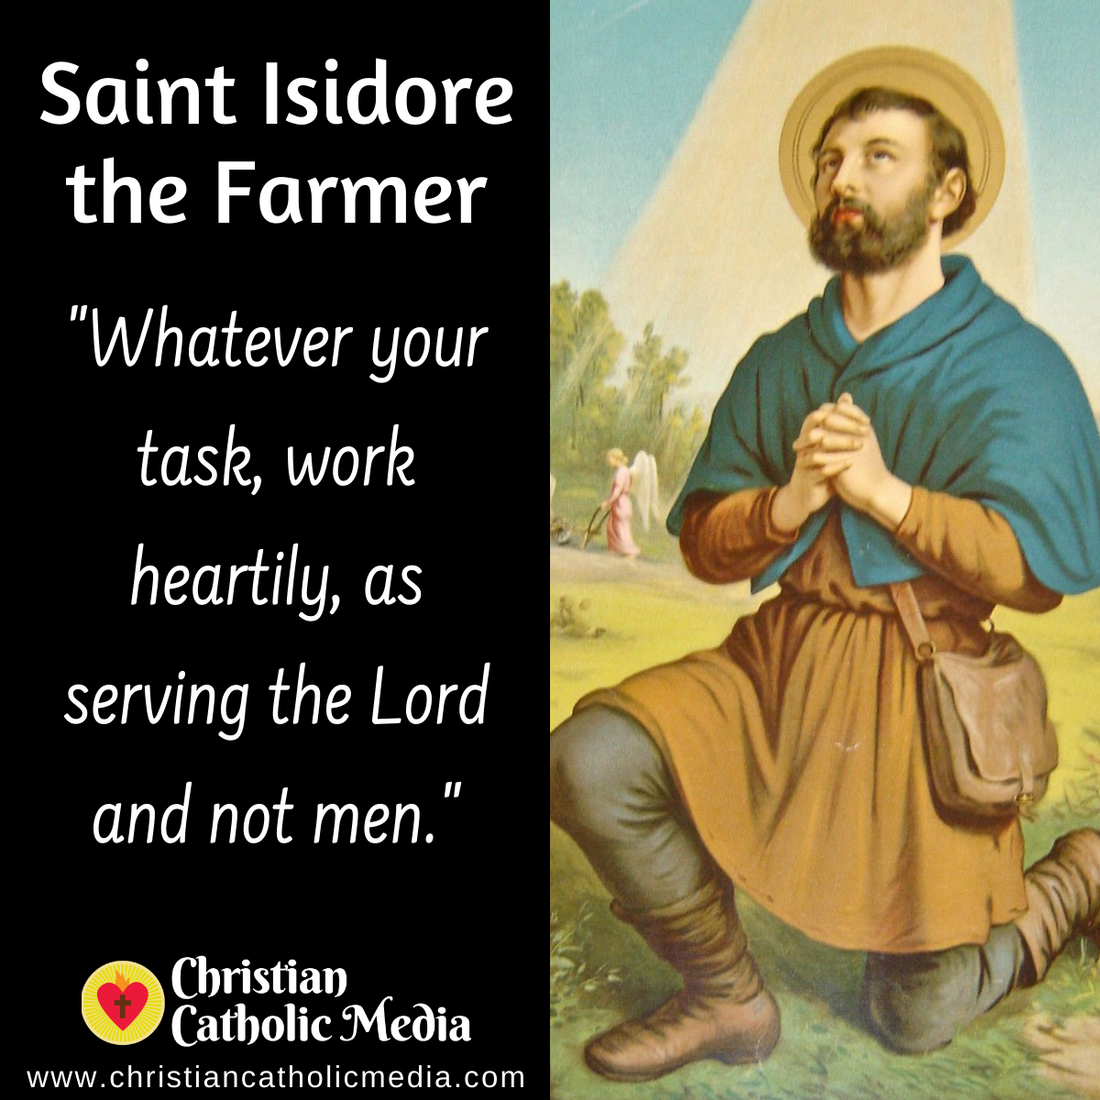 St. Isidore the Farmer - Sunday May 15, 2022